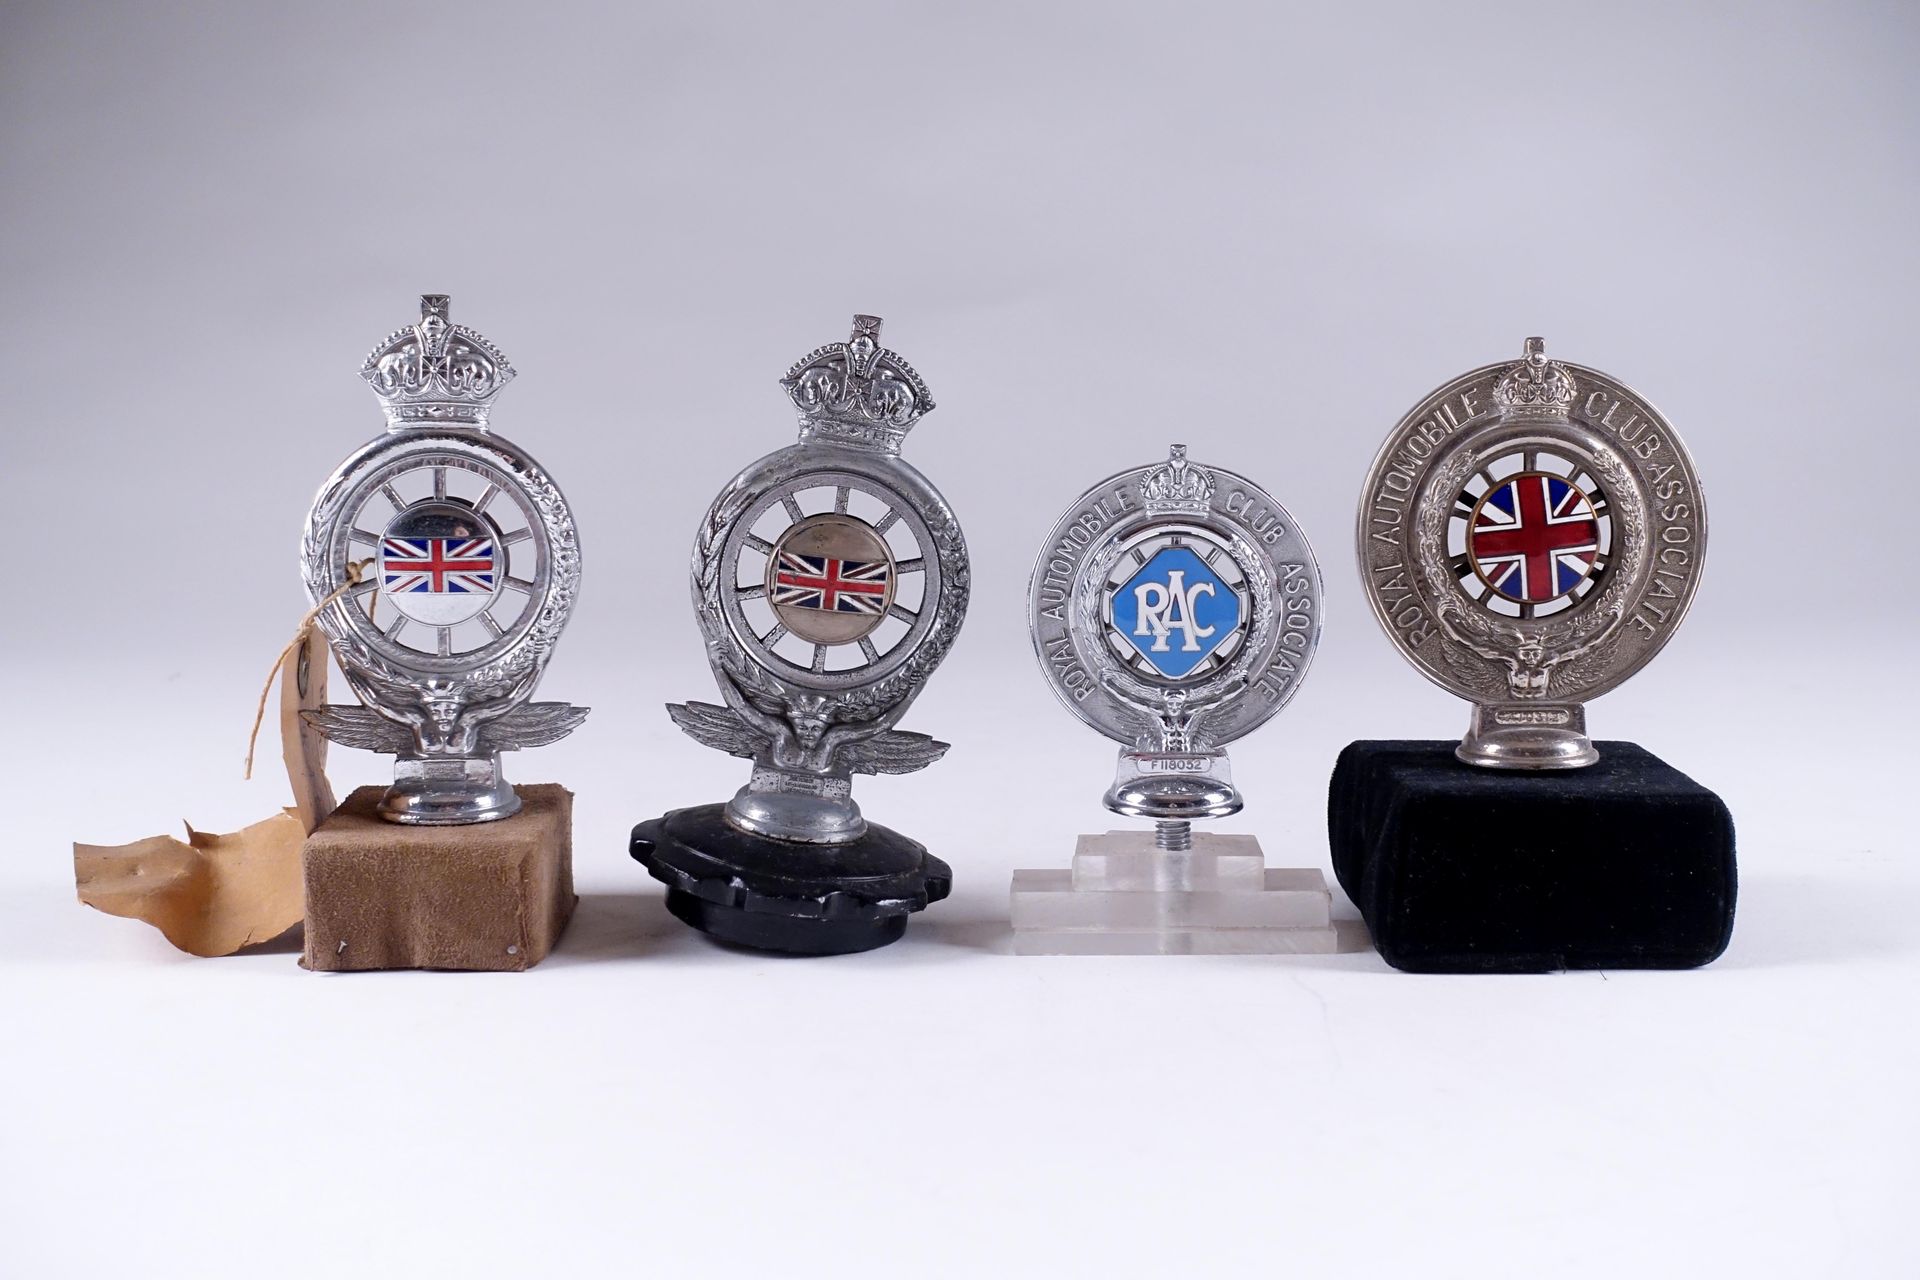 Quatre badges du “Royal Automobile Club“. Tres de ellos tienen motivos de la Uni&hellip;